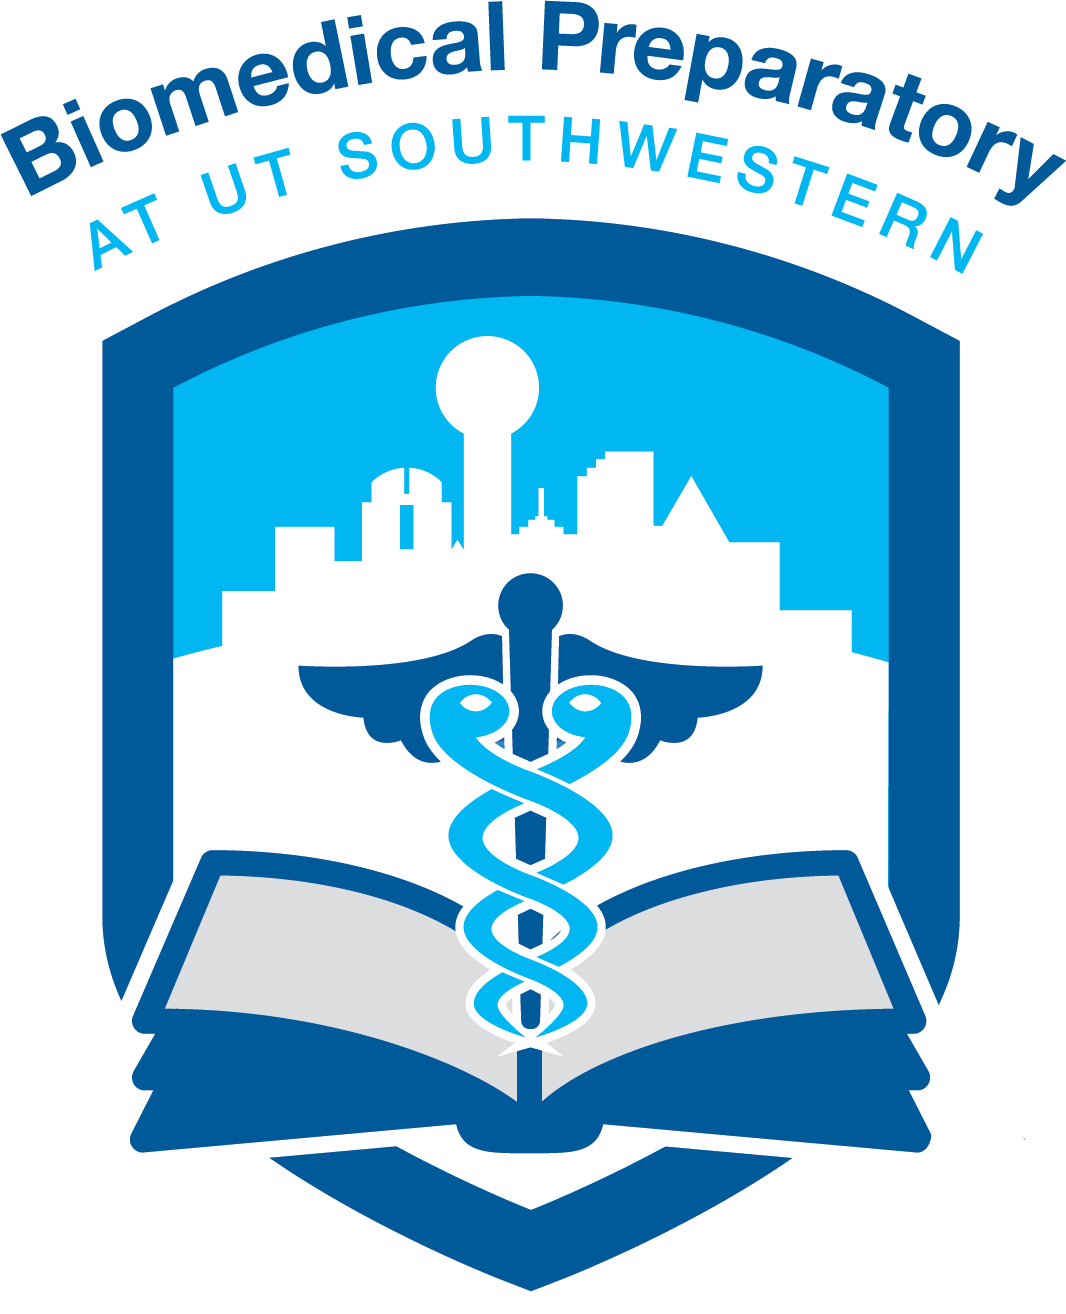 Image of the Biomedical Preparatory at UT Southwestern crest